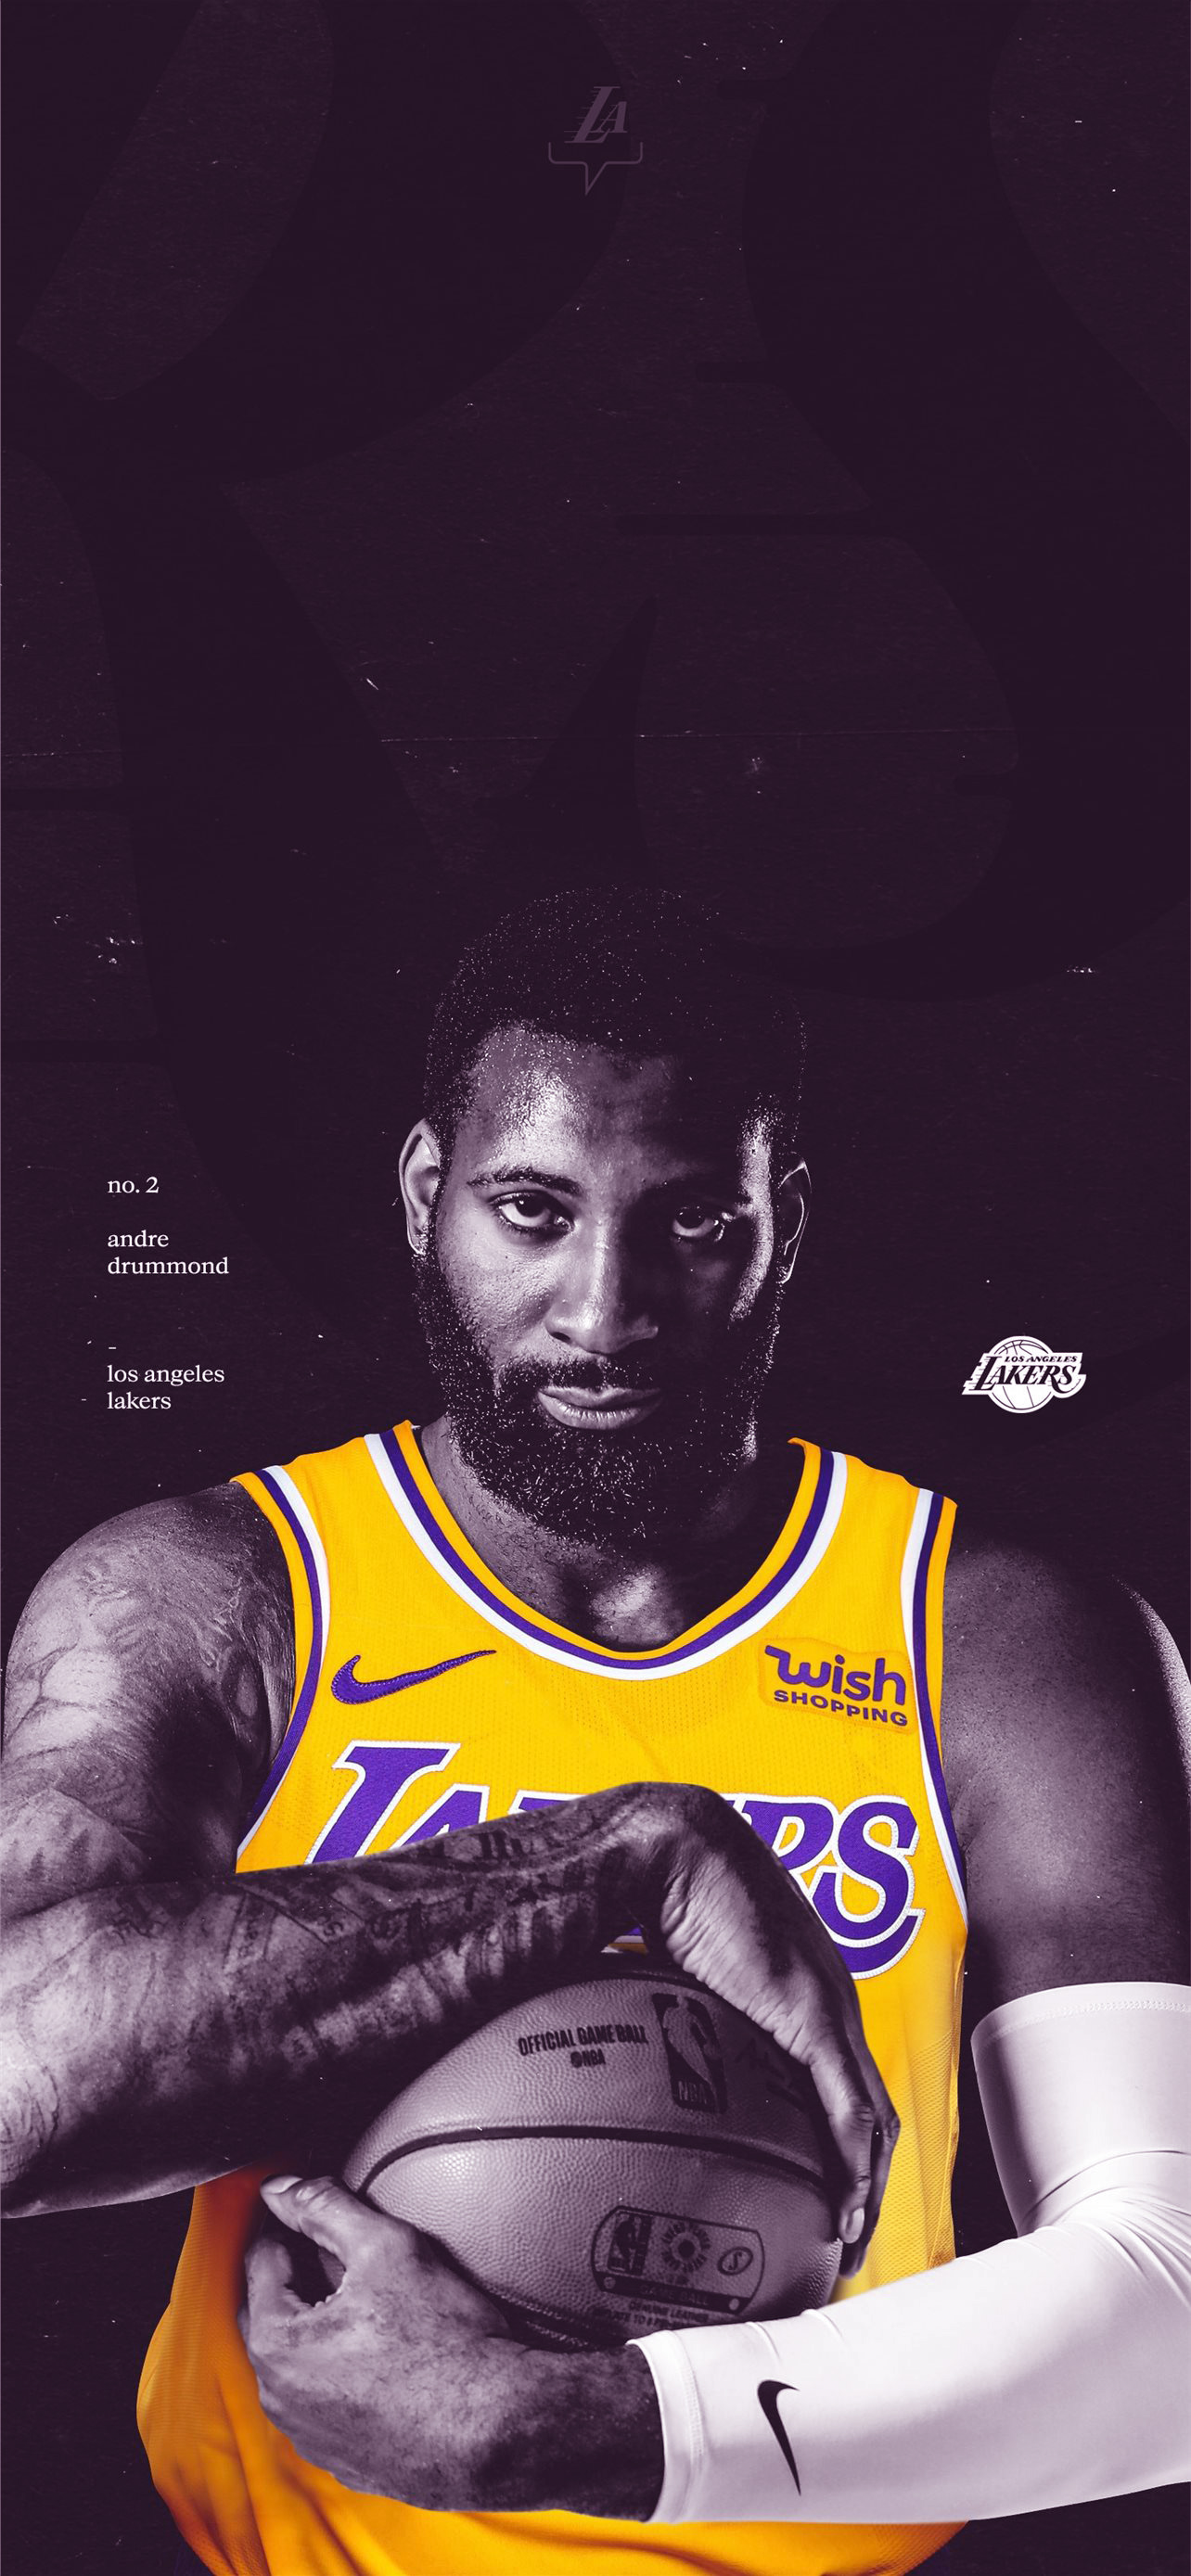 Lebron James NBA Basketball Dunk iPhone 6 Wallpaper Download